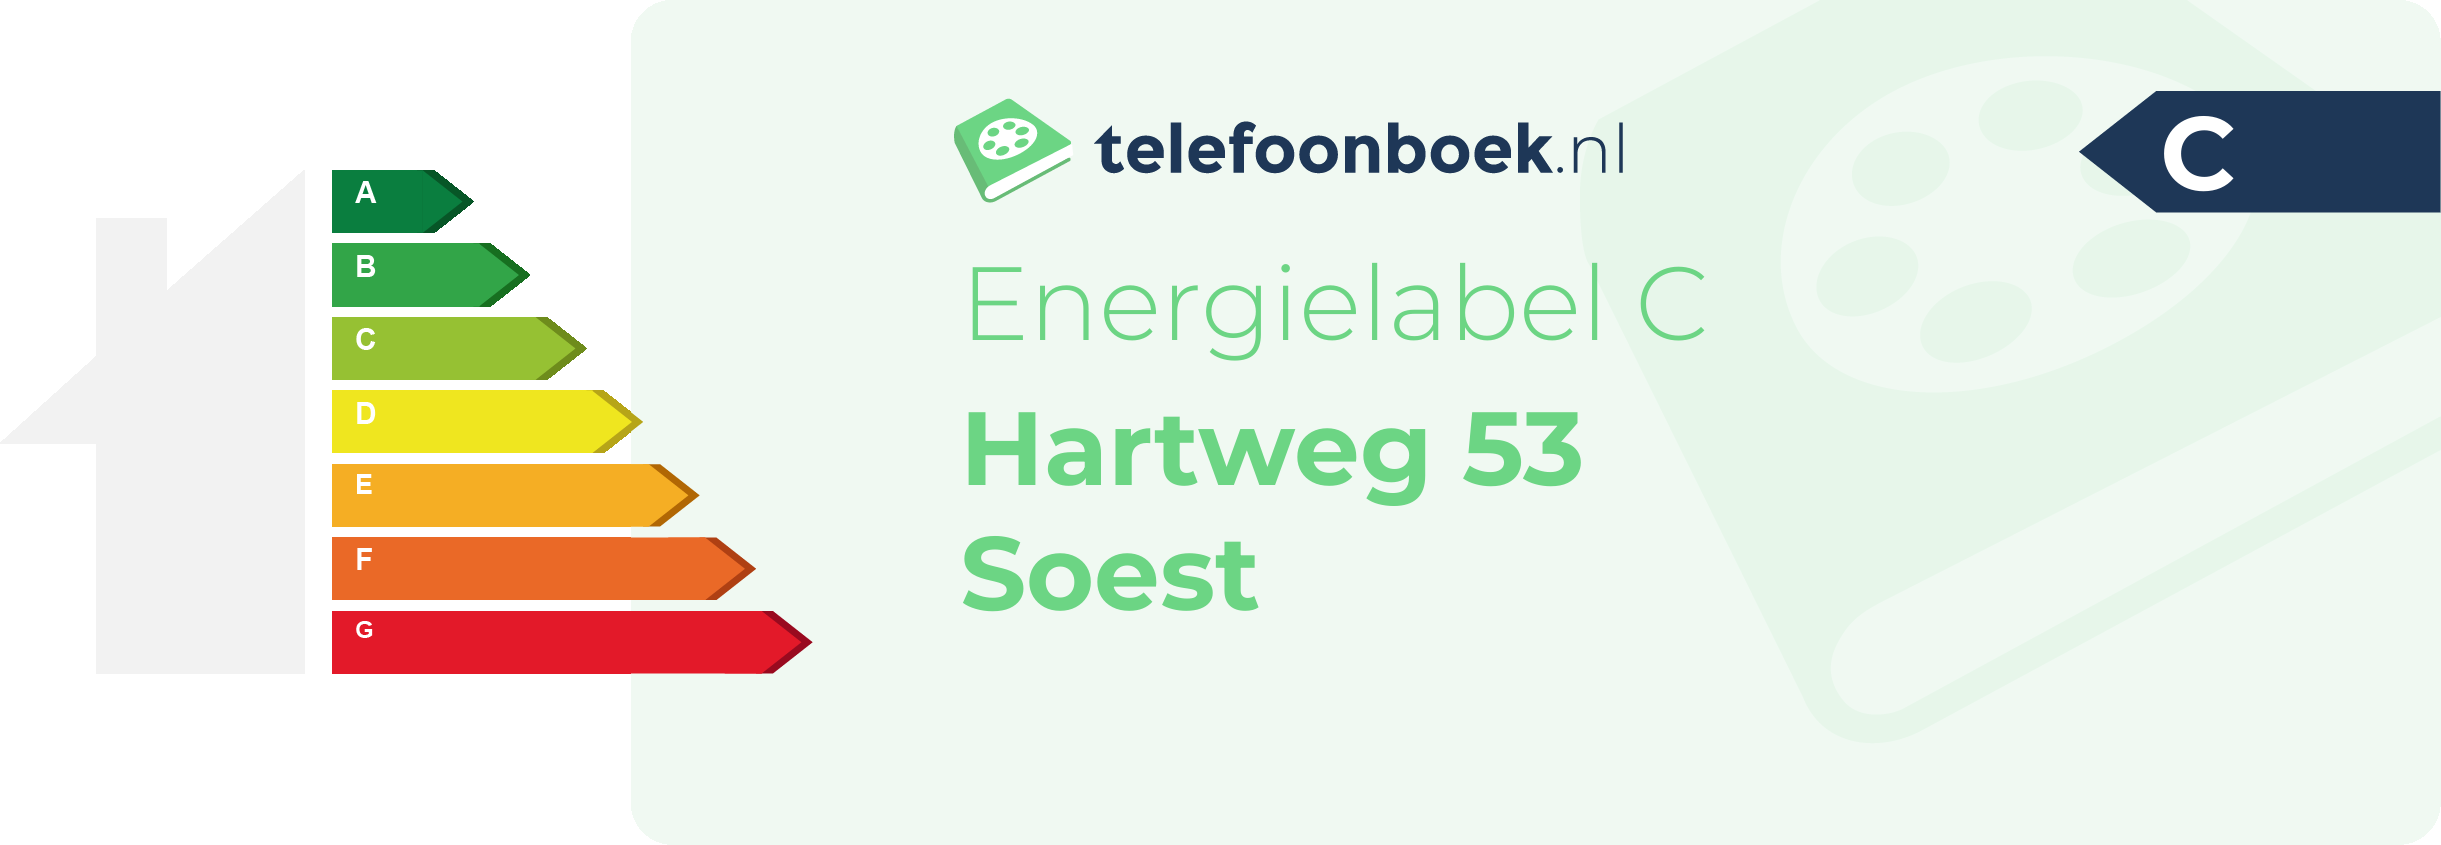 Energielabel Hartweg 53 Soest